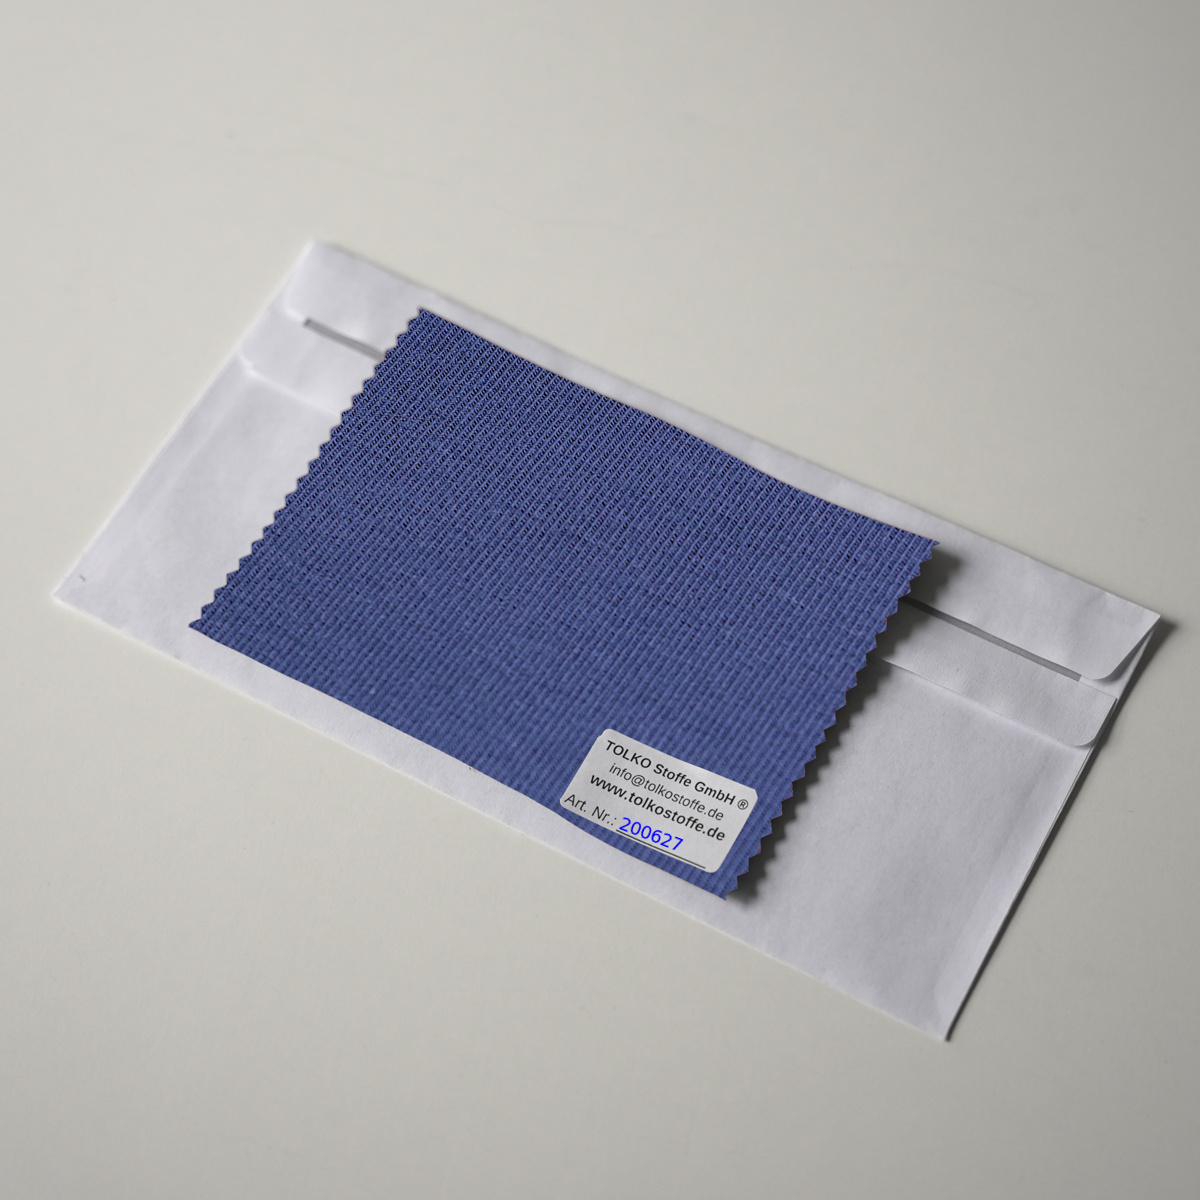 (Muster) Robuster elastischer Polyester Jersey in Blau Meterware als Bekleidungsstoff